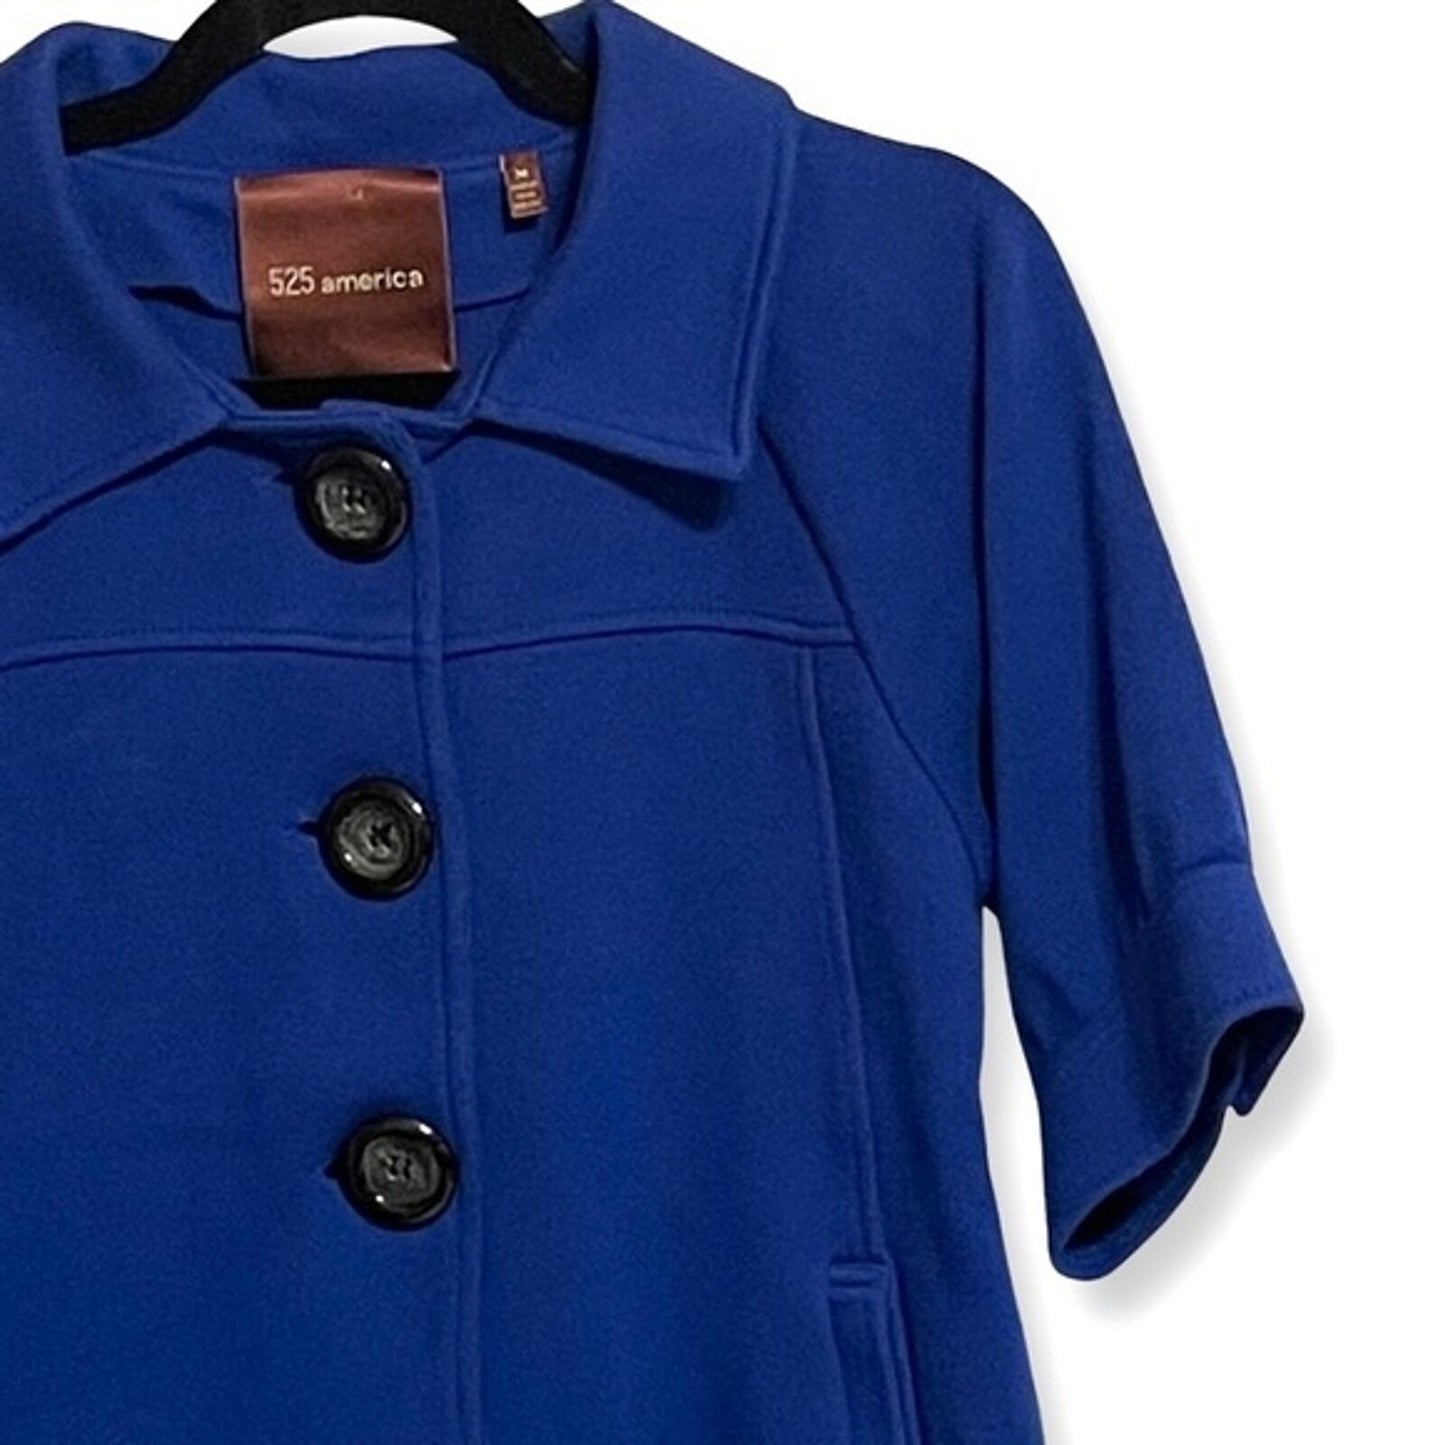 525 America Knit Blue Jacket Blazer Size M Short Sleeve Modern Swing Coat